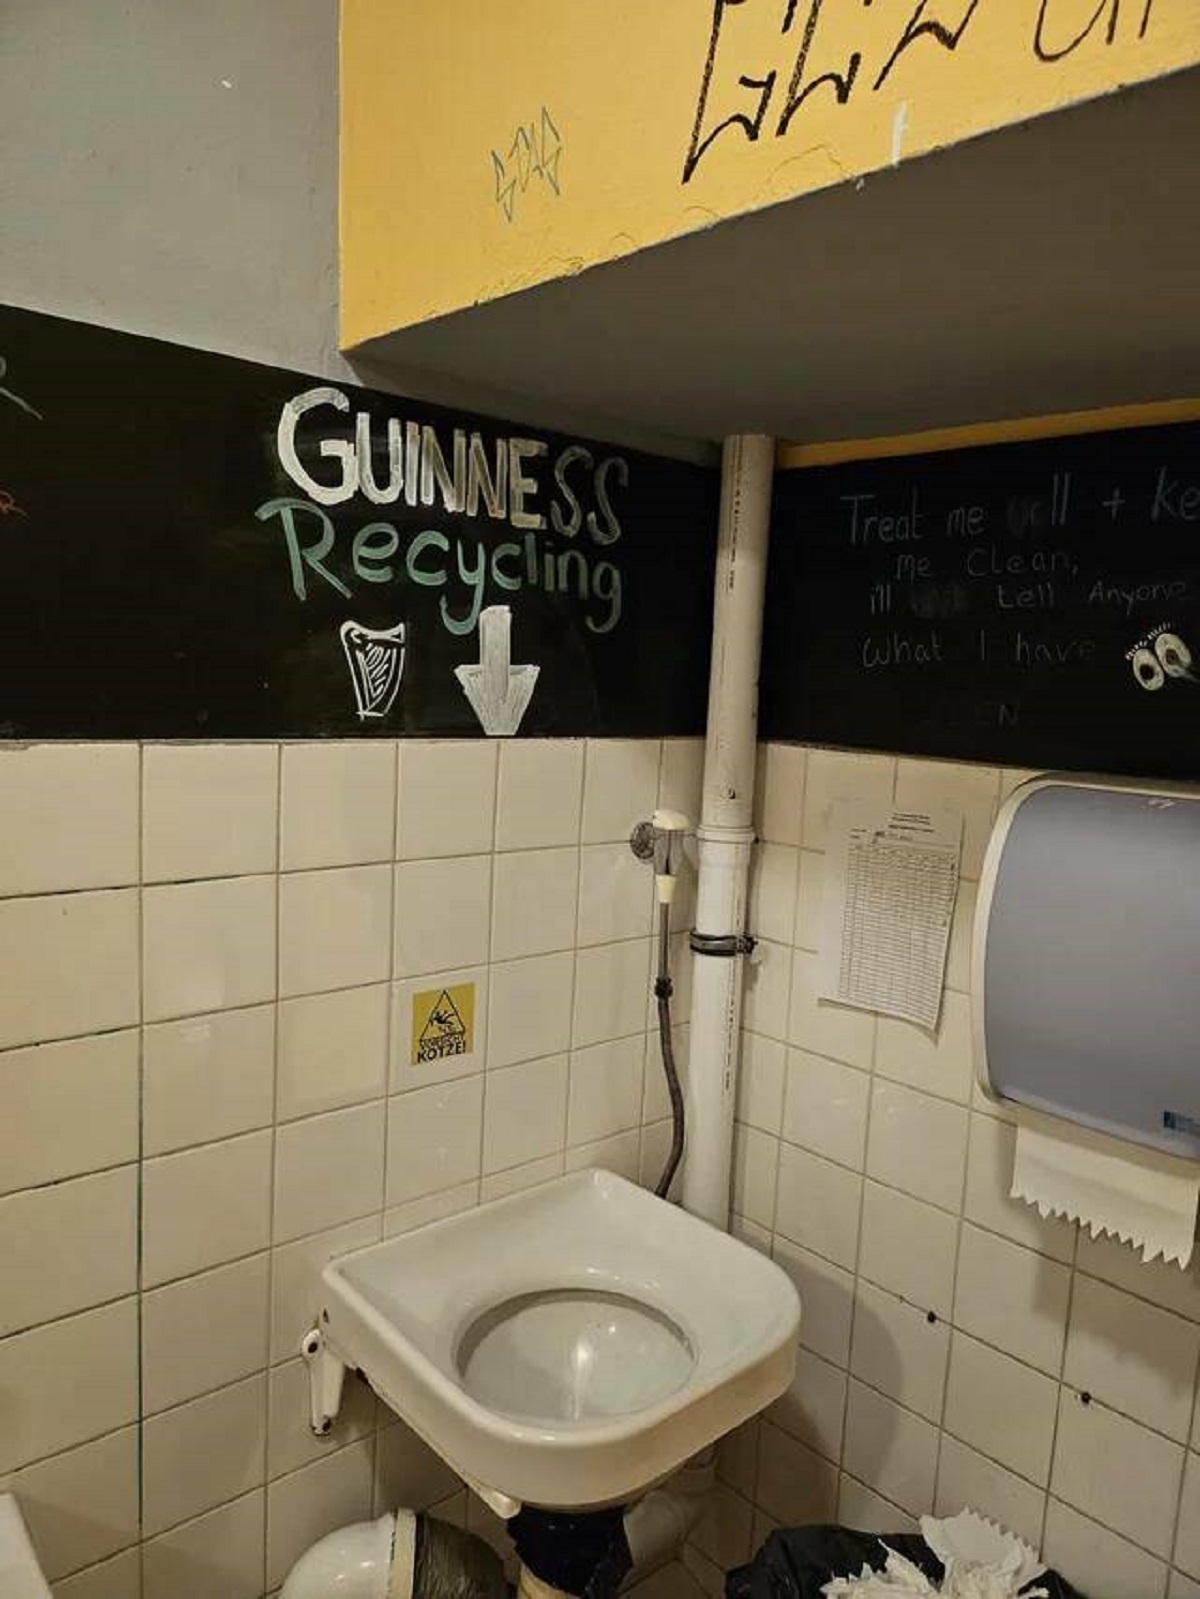 bathroom - Ga Guinness Recycling Erry Facies Kotze! Treat me ll ke Me Clean, illit tell Anyone What I have Bull On